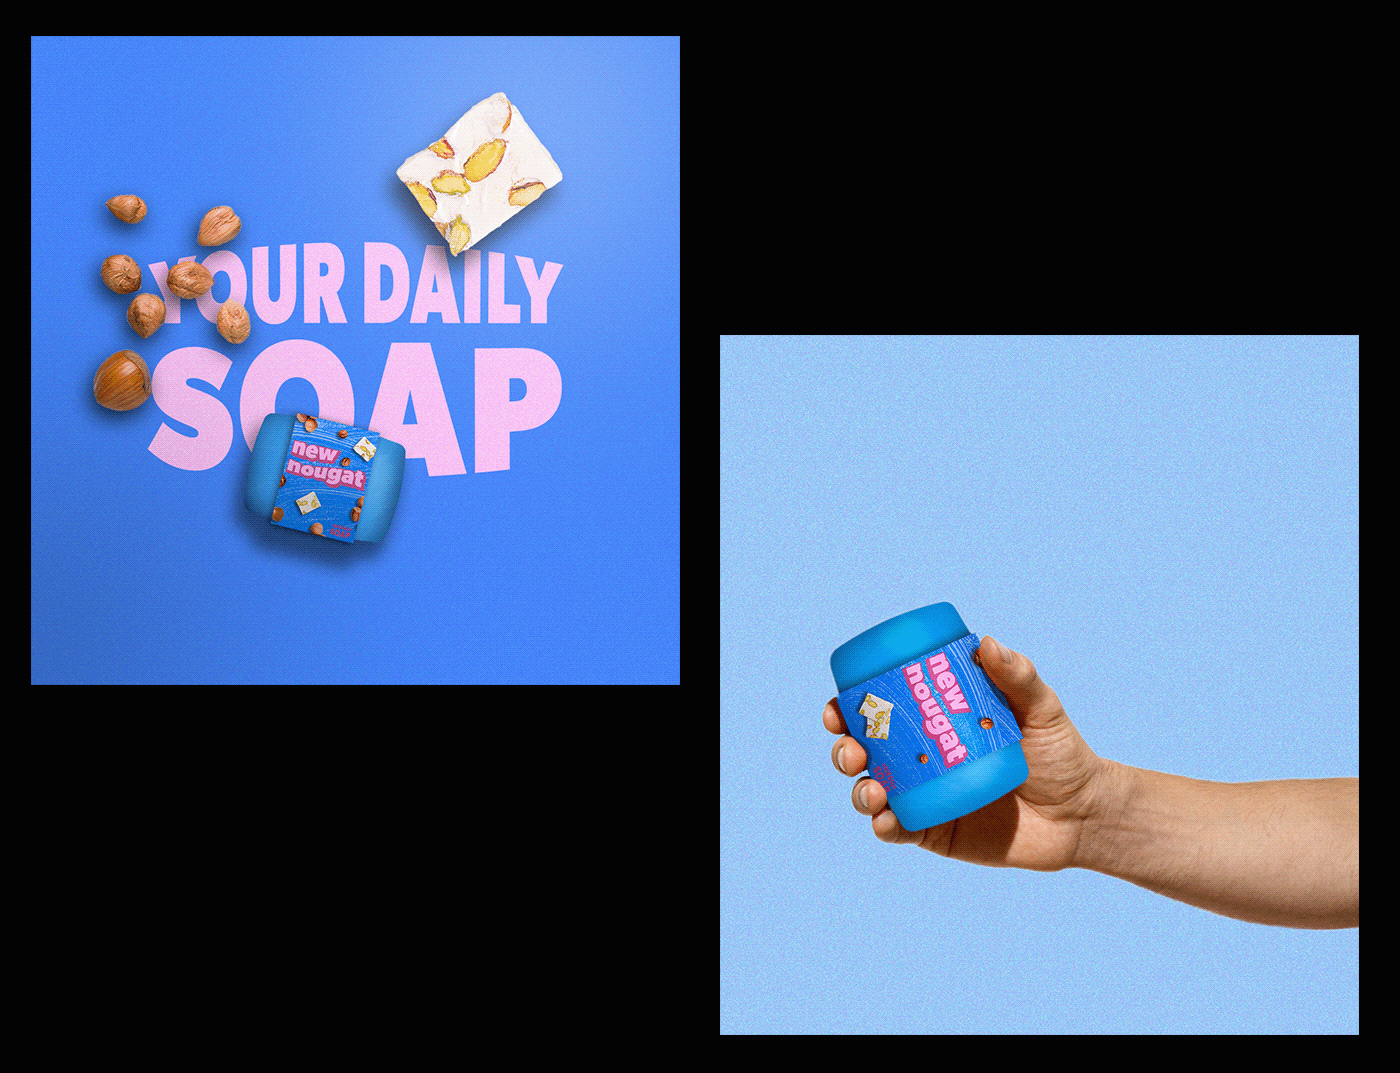 fruits Seife Daily Soap Foam shampoo SHOWER shower gel Soap bar packaging design soap